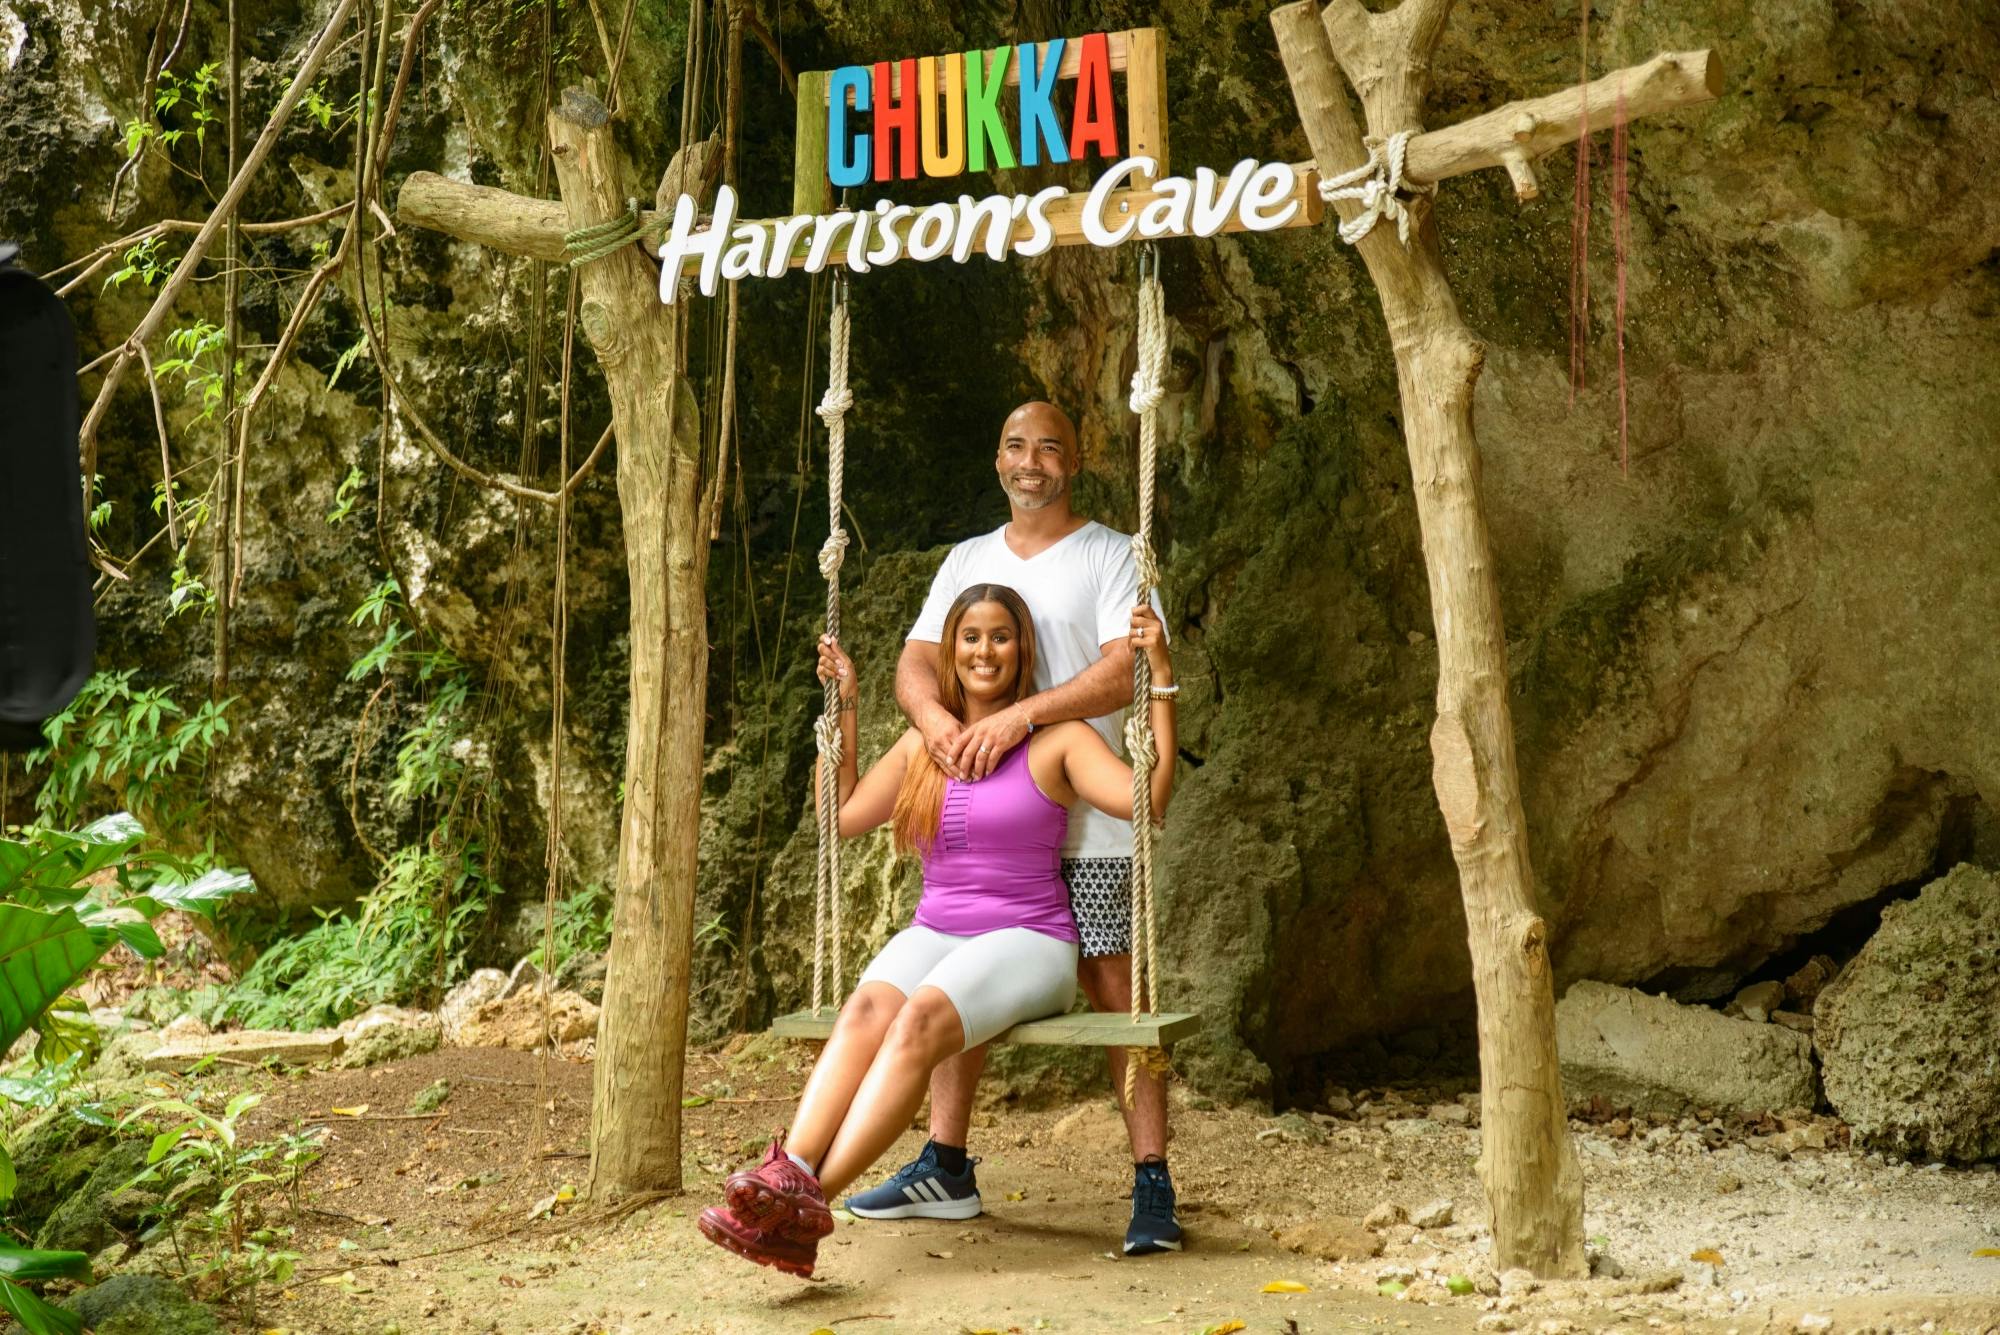 Harrison's Cave Eco-Adventure Park Ticket & Monkey Zipline